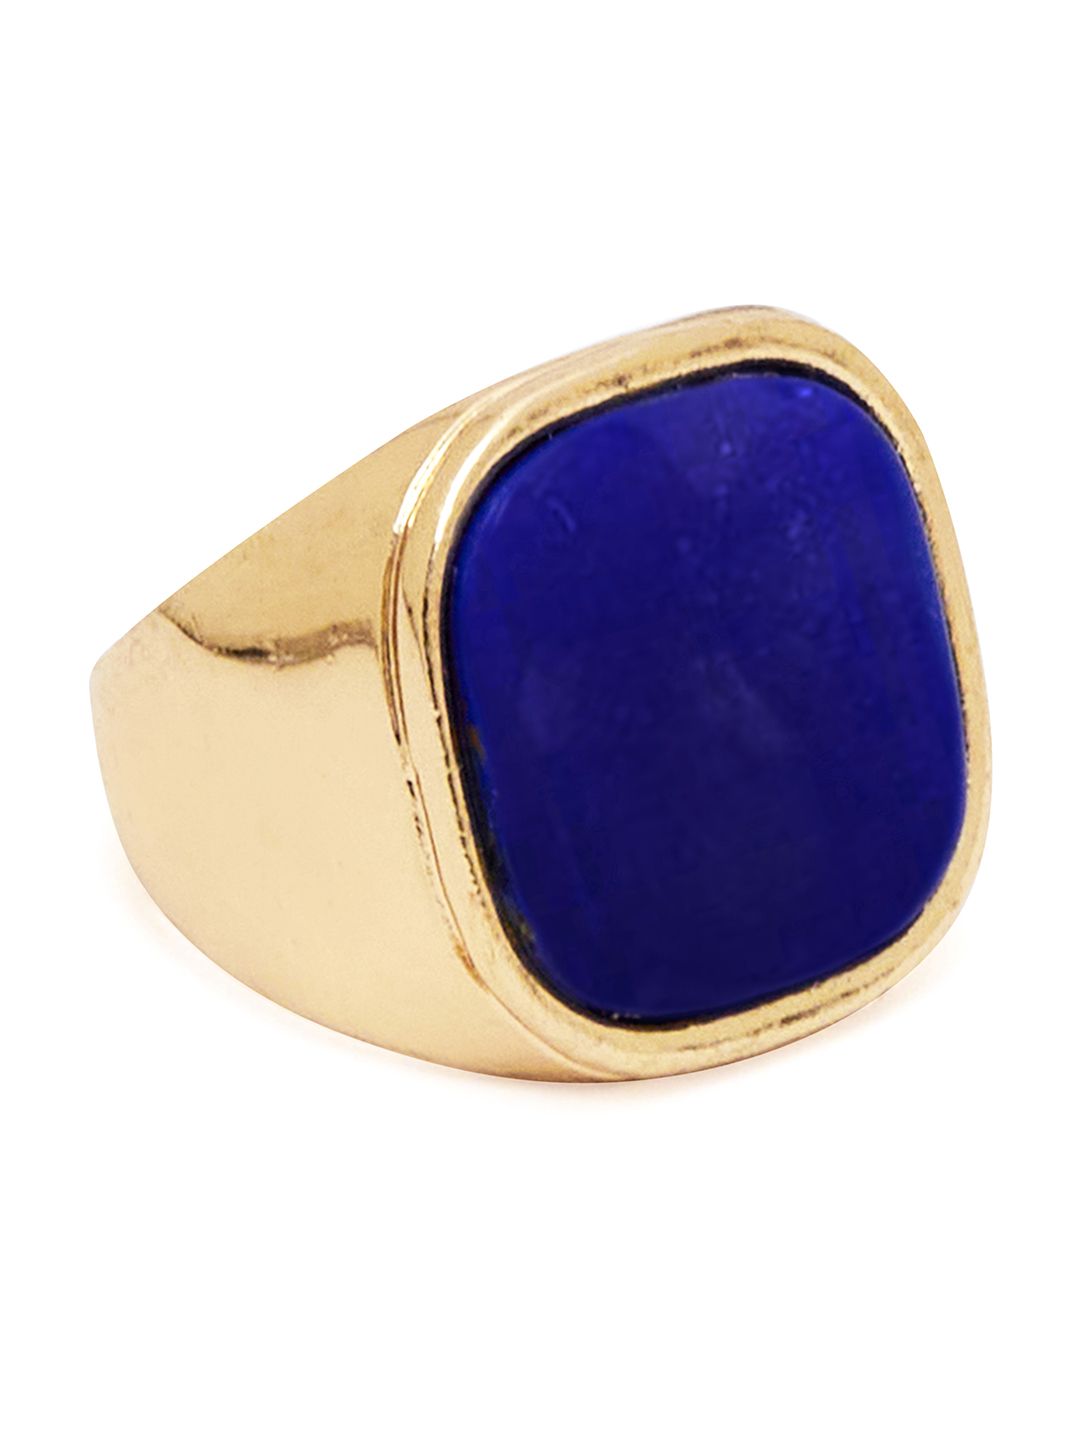 URBANIC Women Blue & Gold-Toned Geometric Ring Price in India